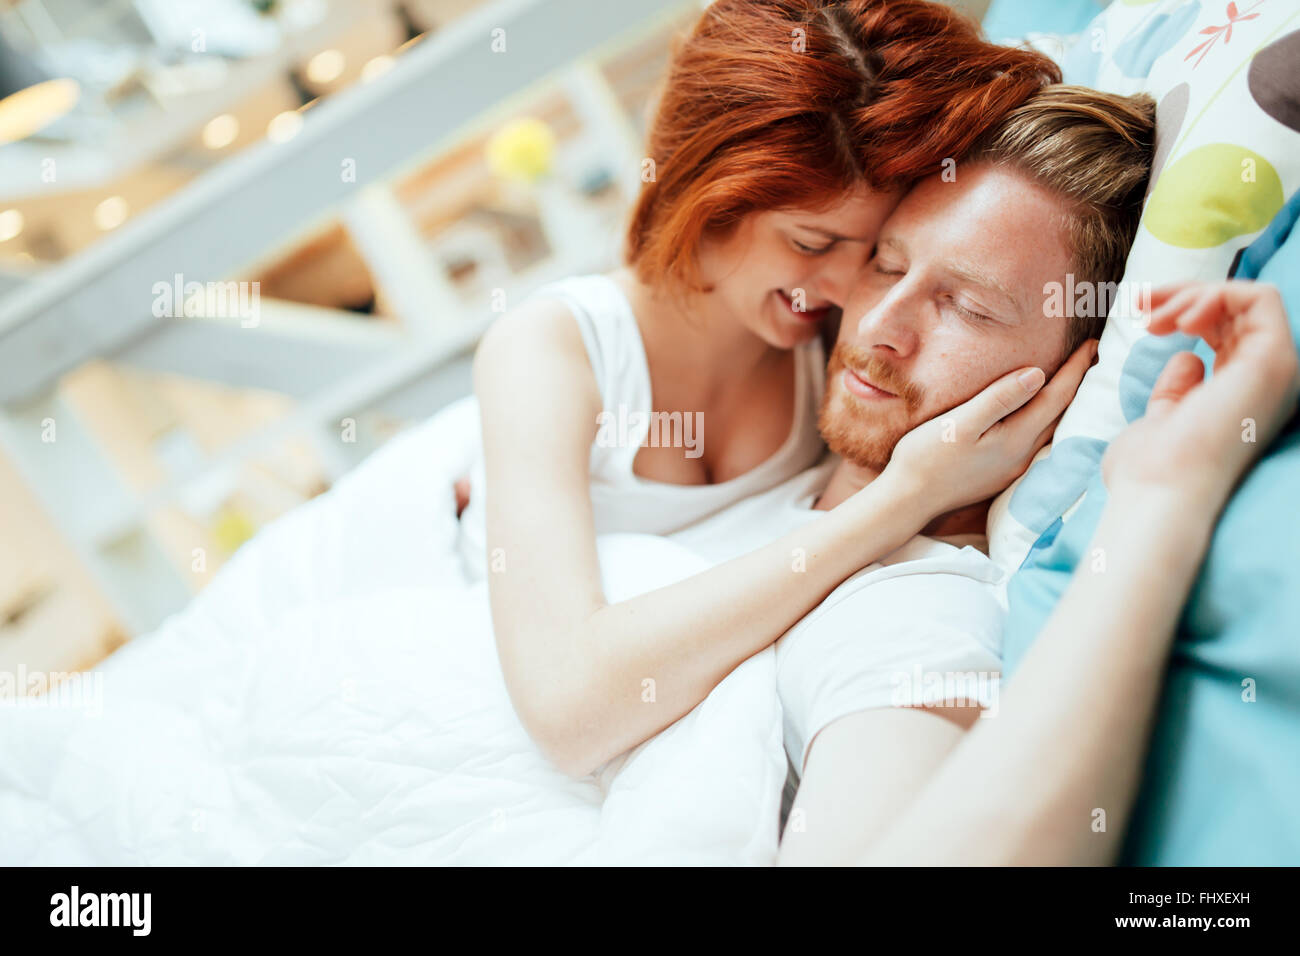 Couple Bedroom Love Romance Kiss Intimacy Bed Stock Photos